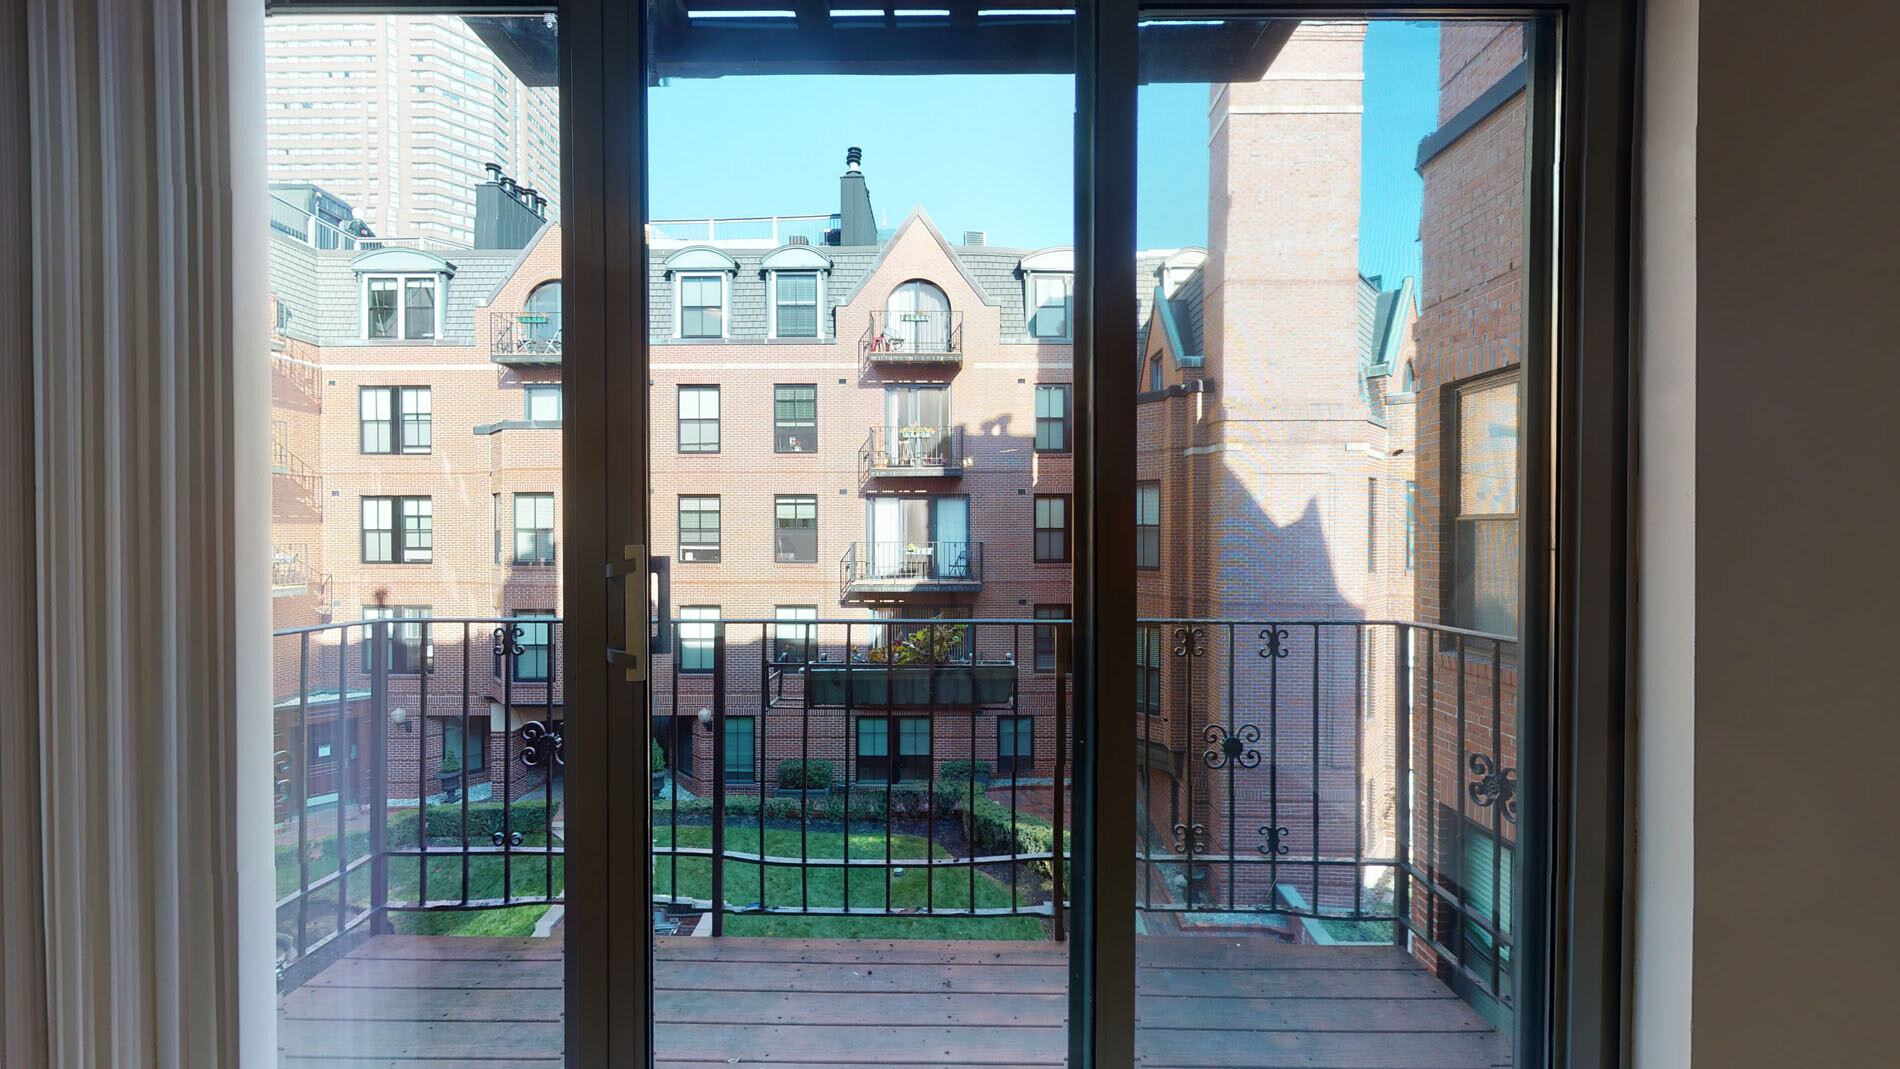 Photos of apartment on Harcourt St.,Boston MA 02116